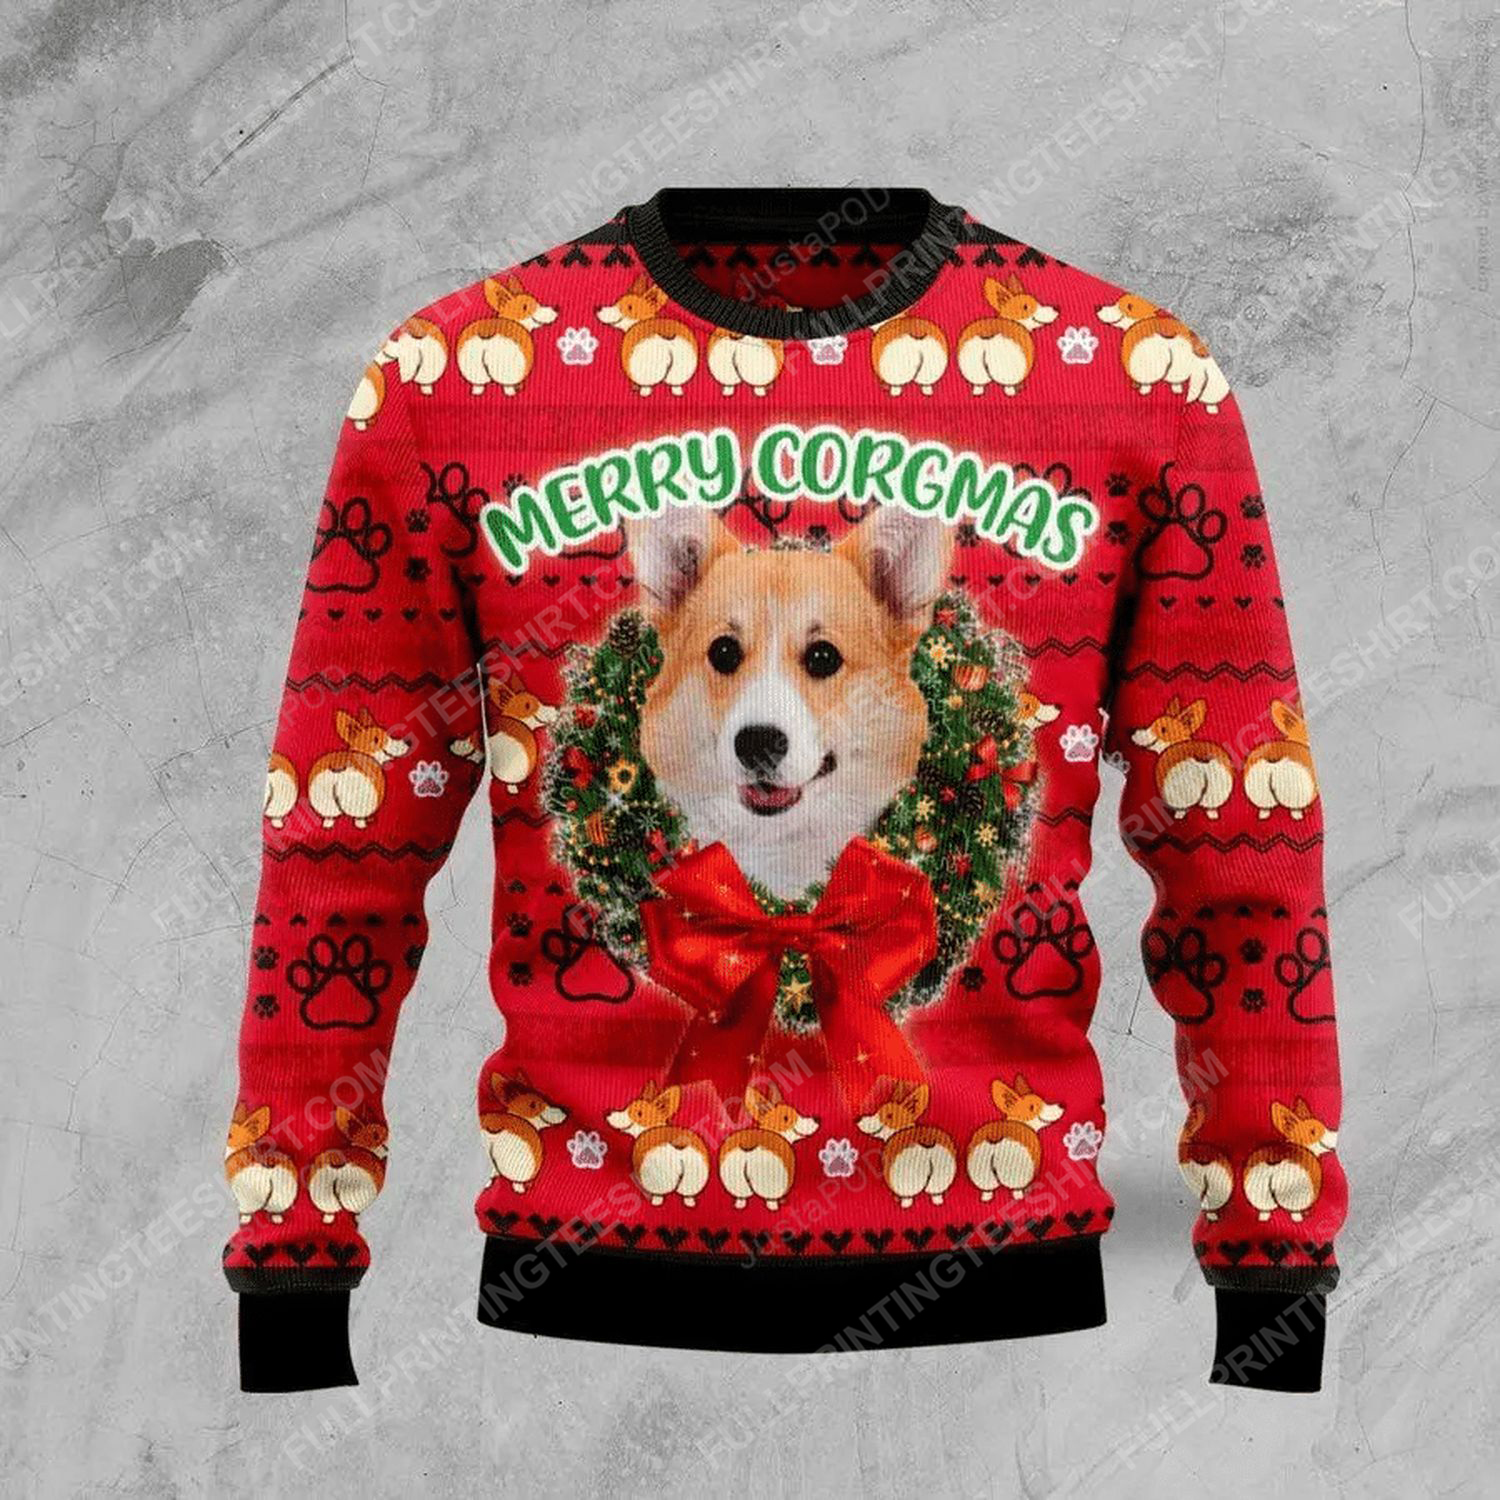 Pembroke welsh corgi dog ugly christmas sweater